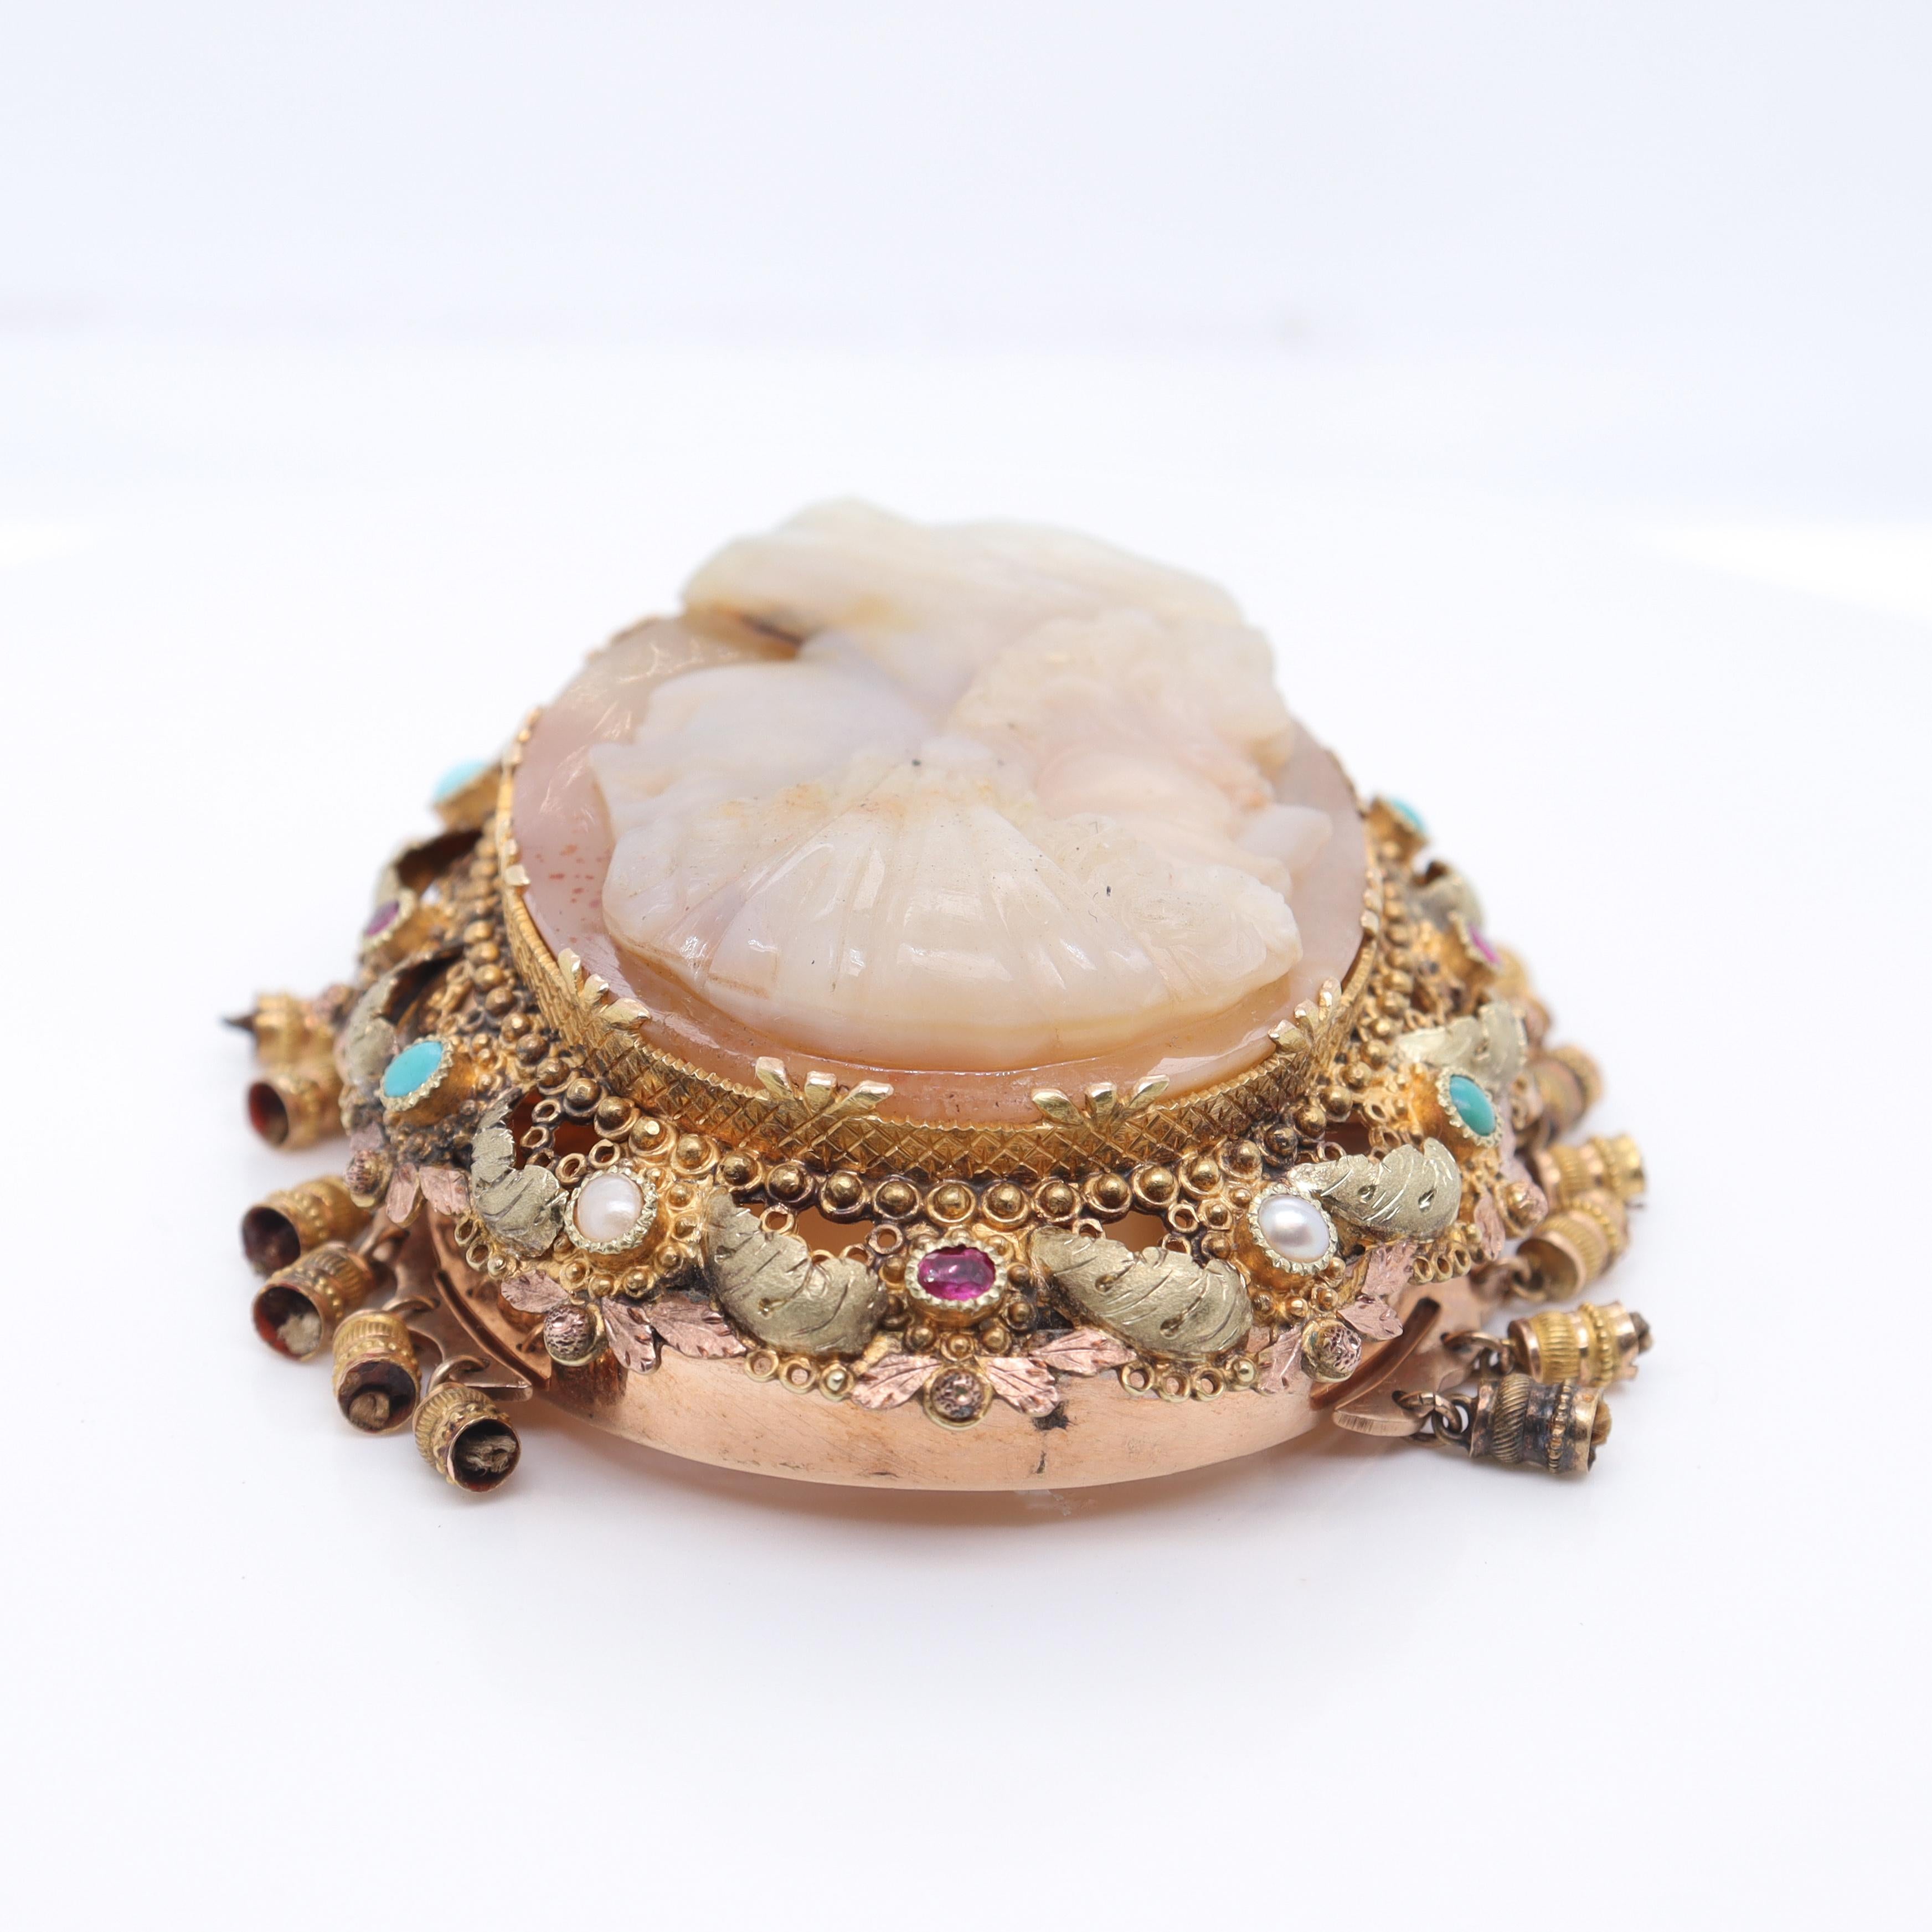 Antique Gold & Carved Agate Cameo Hermaphrodite Bracelet or Necklace Clasp For Sale 2